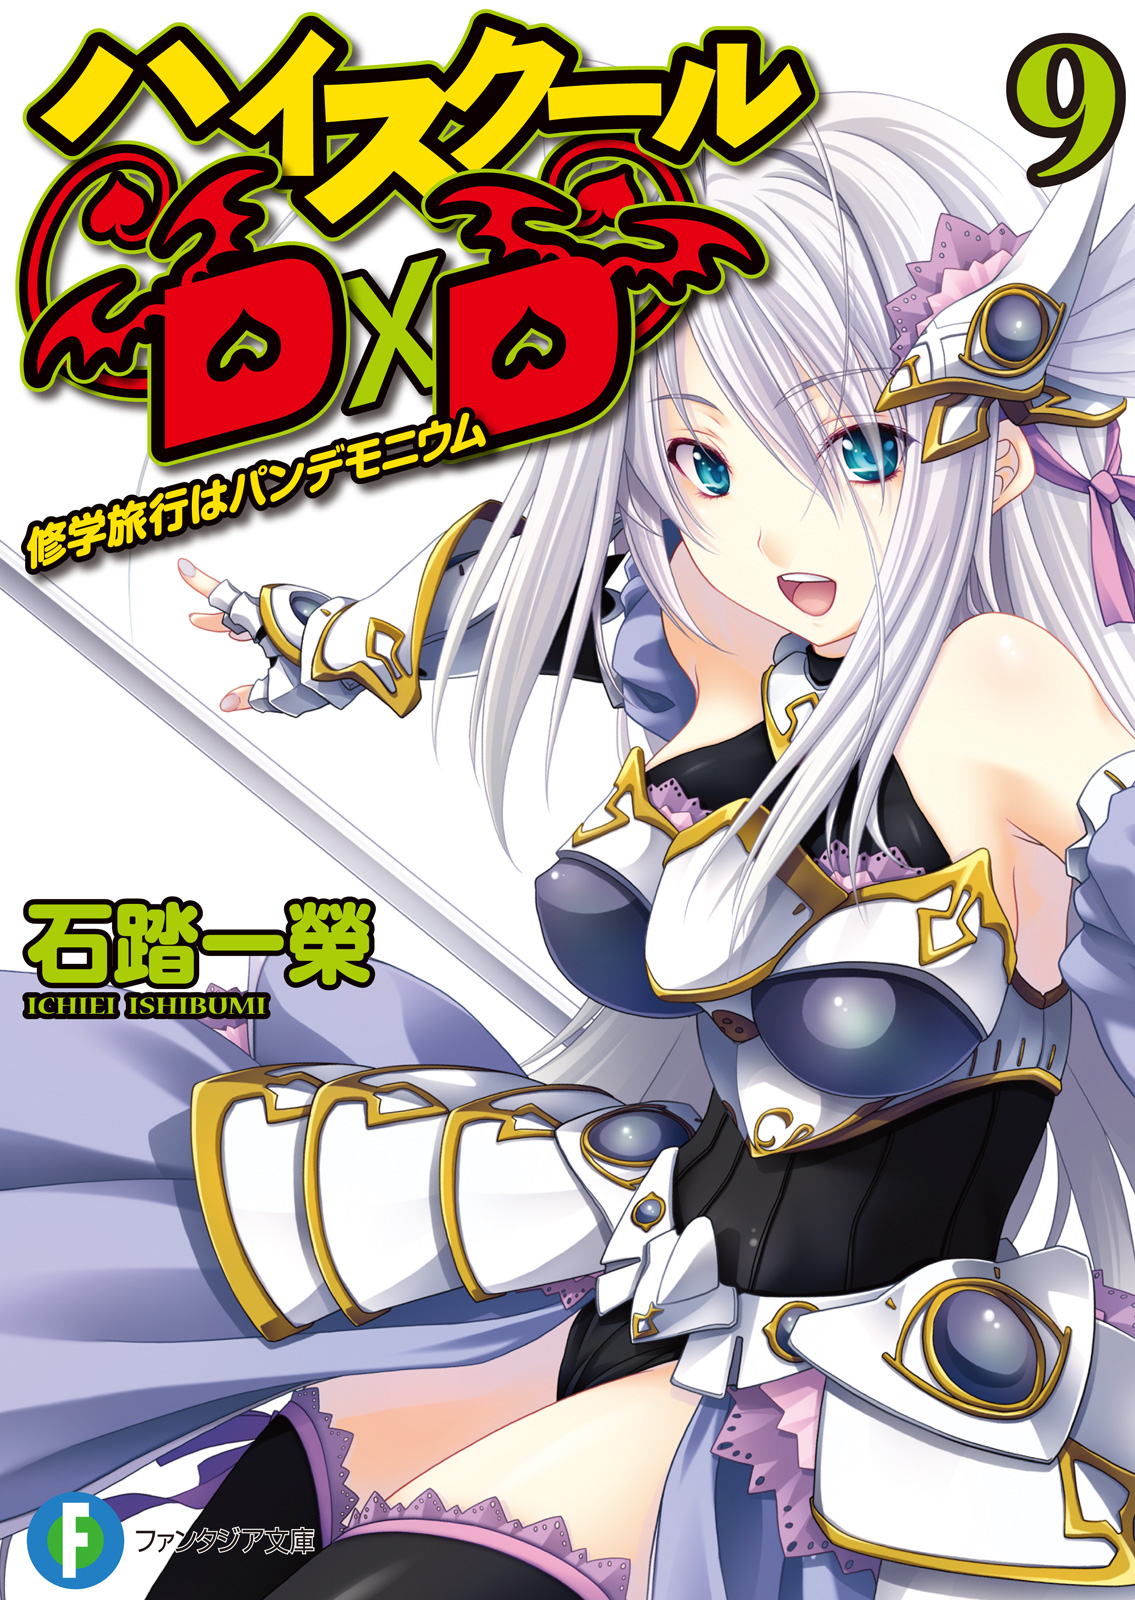  High School DxD, Vol. 3 (light novel): Excalibur of the Moonlit  Schoolyard (High School DxD (light novel)) eBook : Ishibumi, Ichiei,  Miyama-Zero: Kindle Store